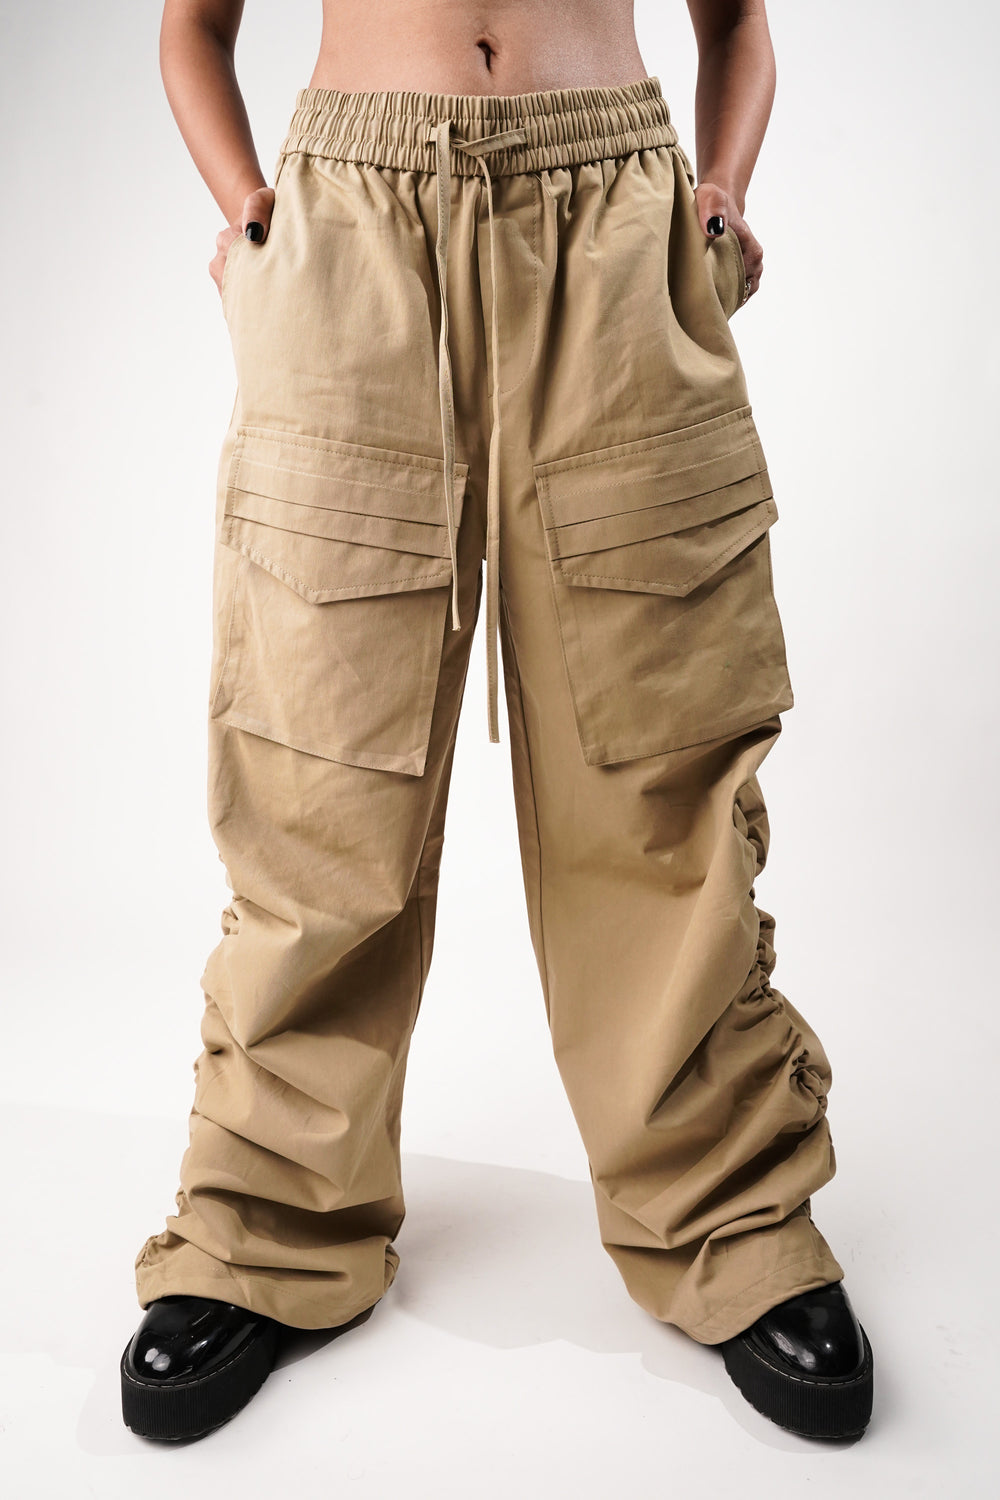 Khaki cargo pants with side shirring detail